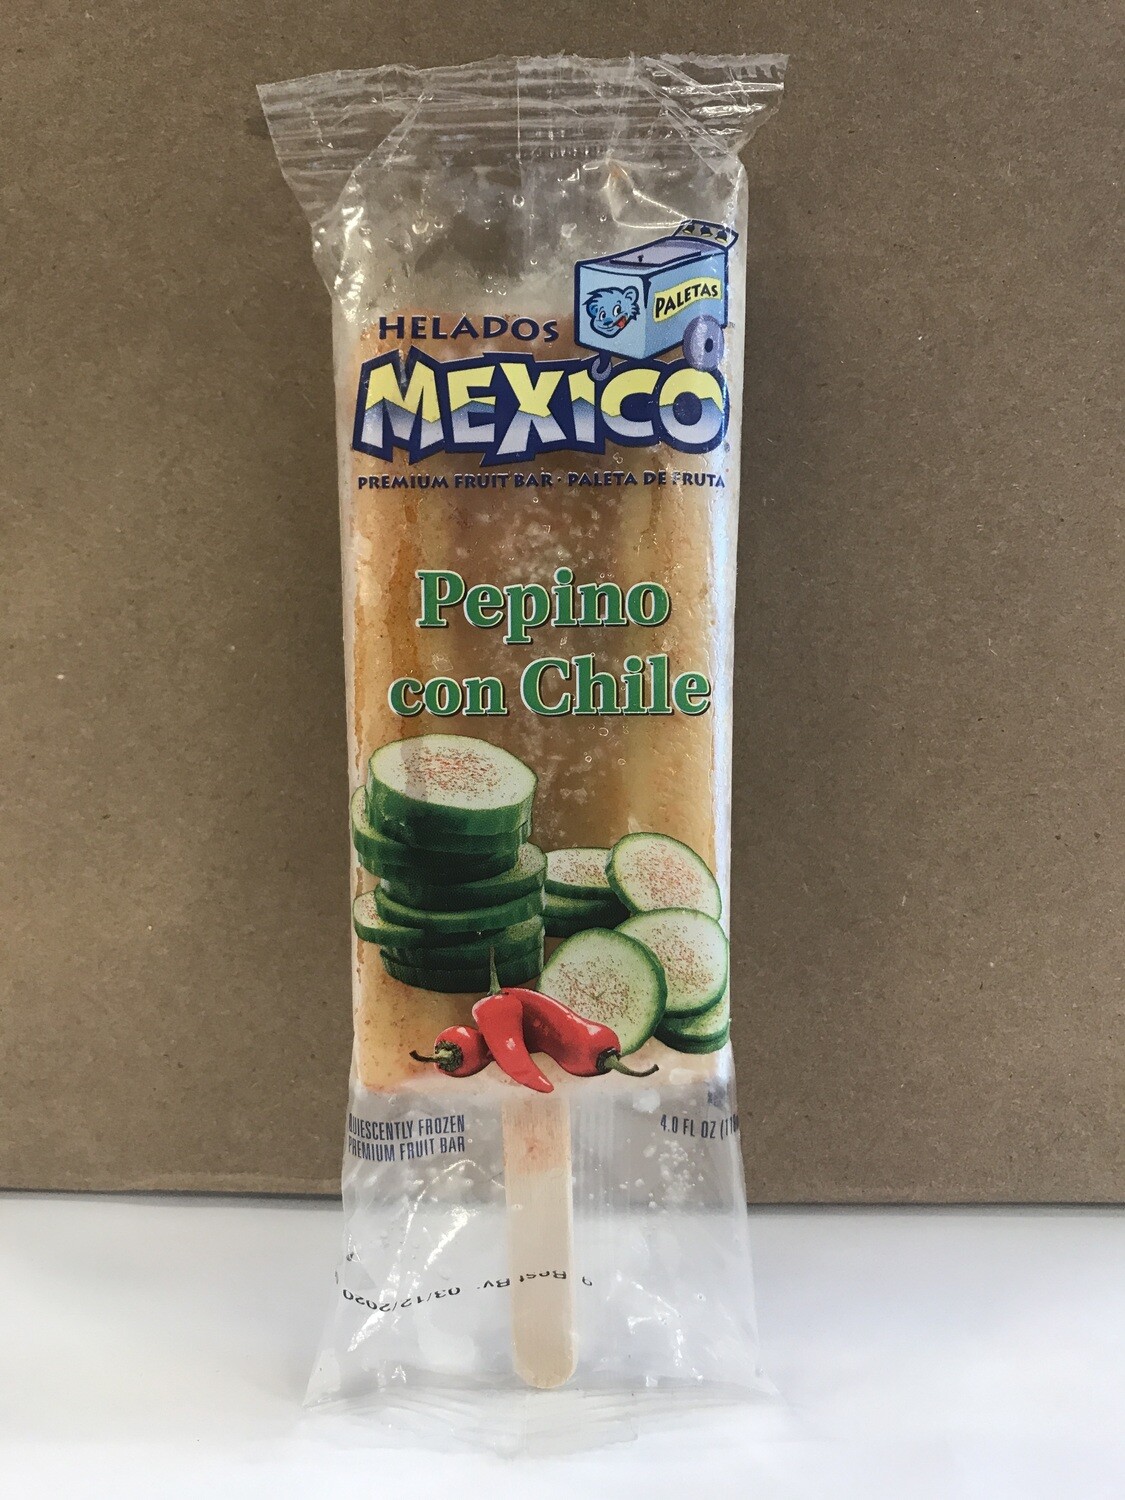 Frozen / Ice Cream Novelty / Helados Mexico Chile Cucumber